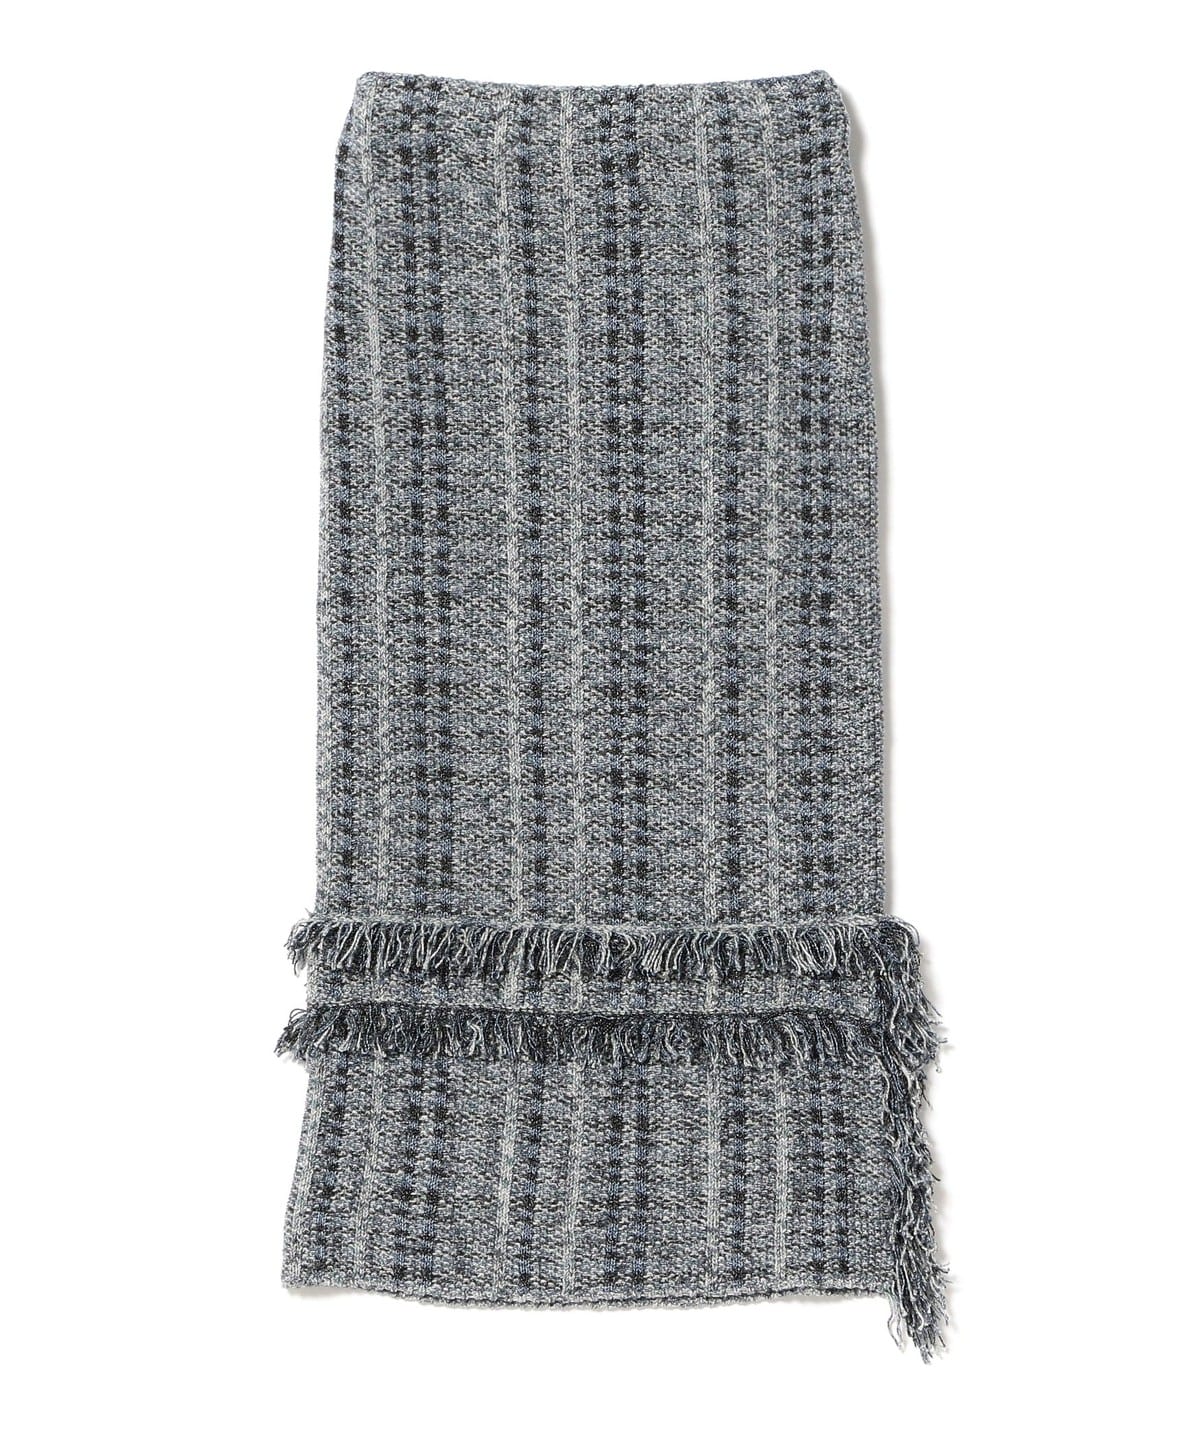 BEAMS BOY BEAMS BOY Outlet] maturely / Knit Tweed Fringe Skirt 